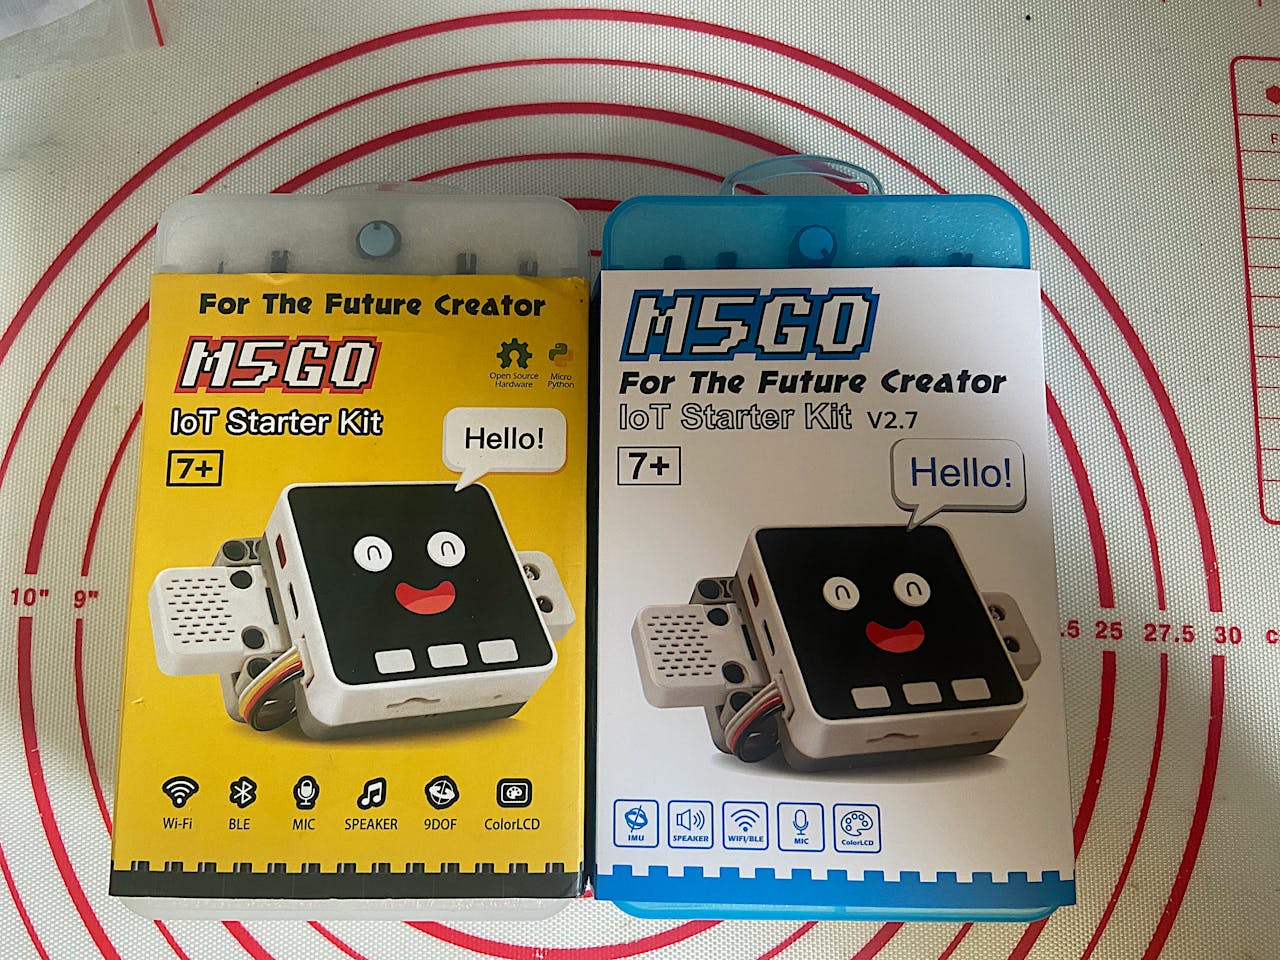 M5GO IOT Starter Kit Part 1 - Hackster.io